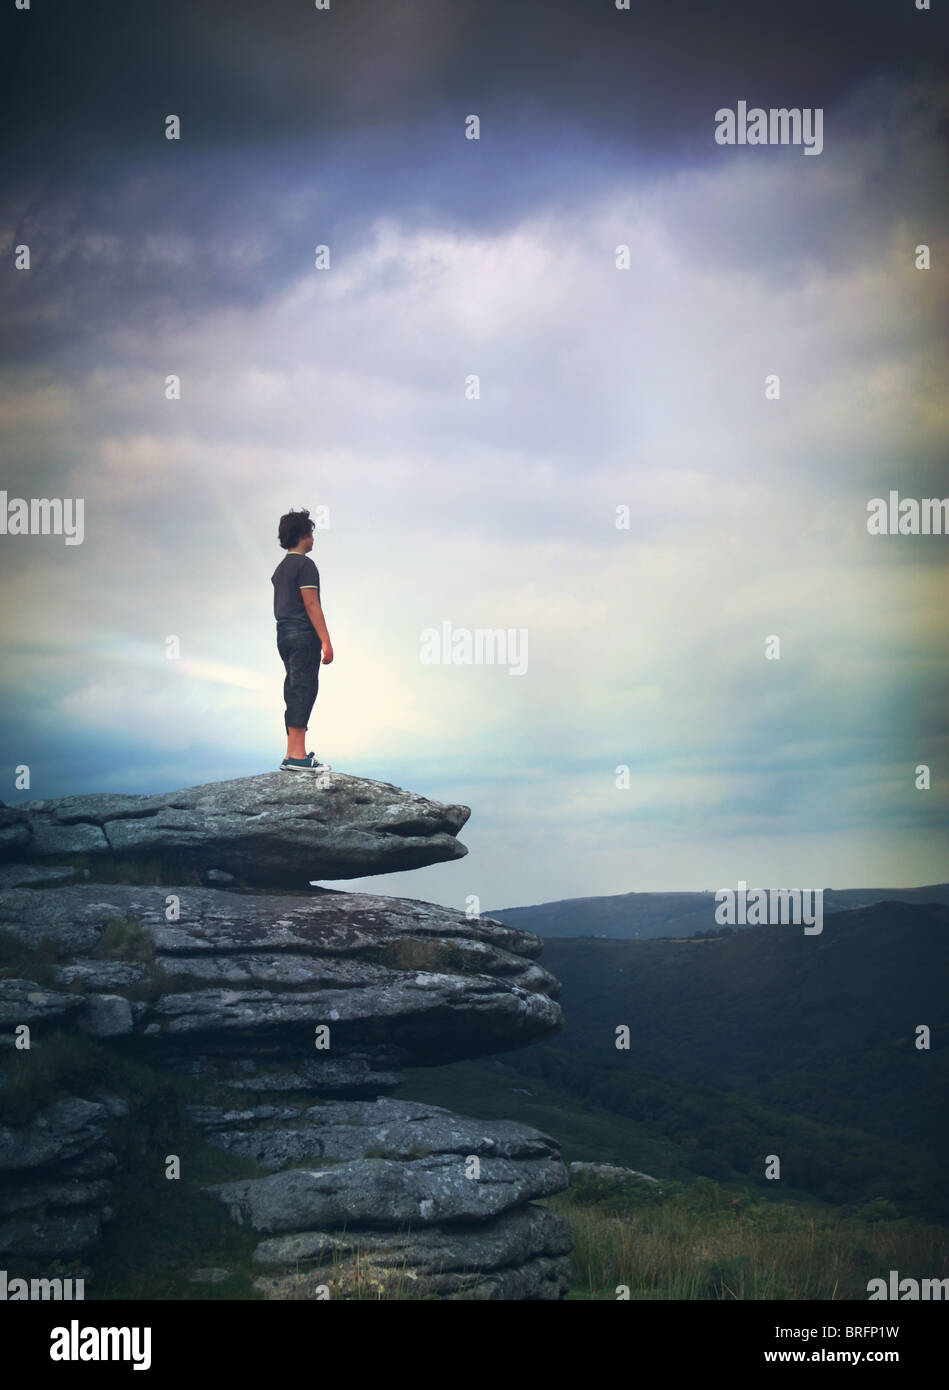 boy stood on rocks looking across moors Stock Photo